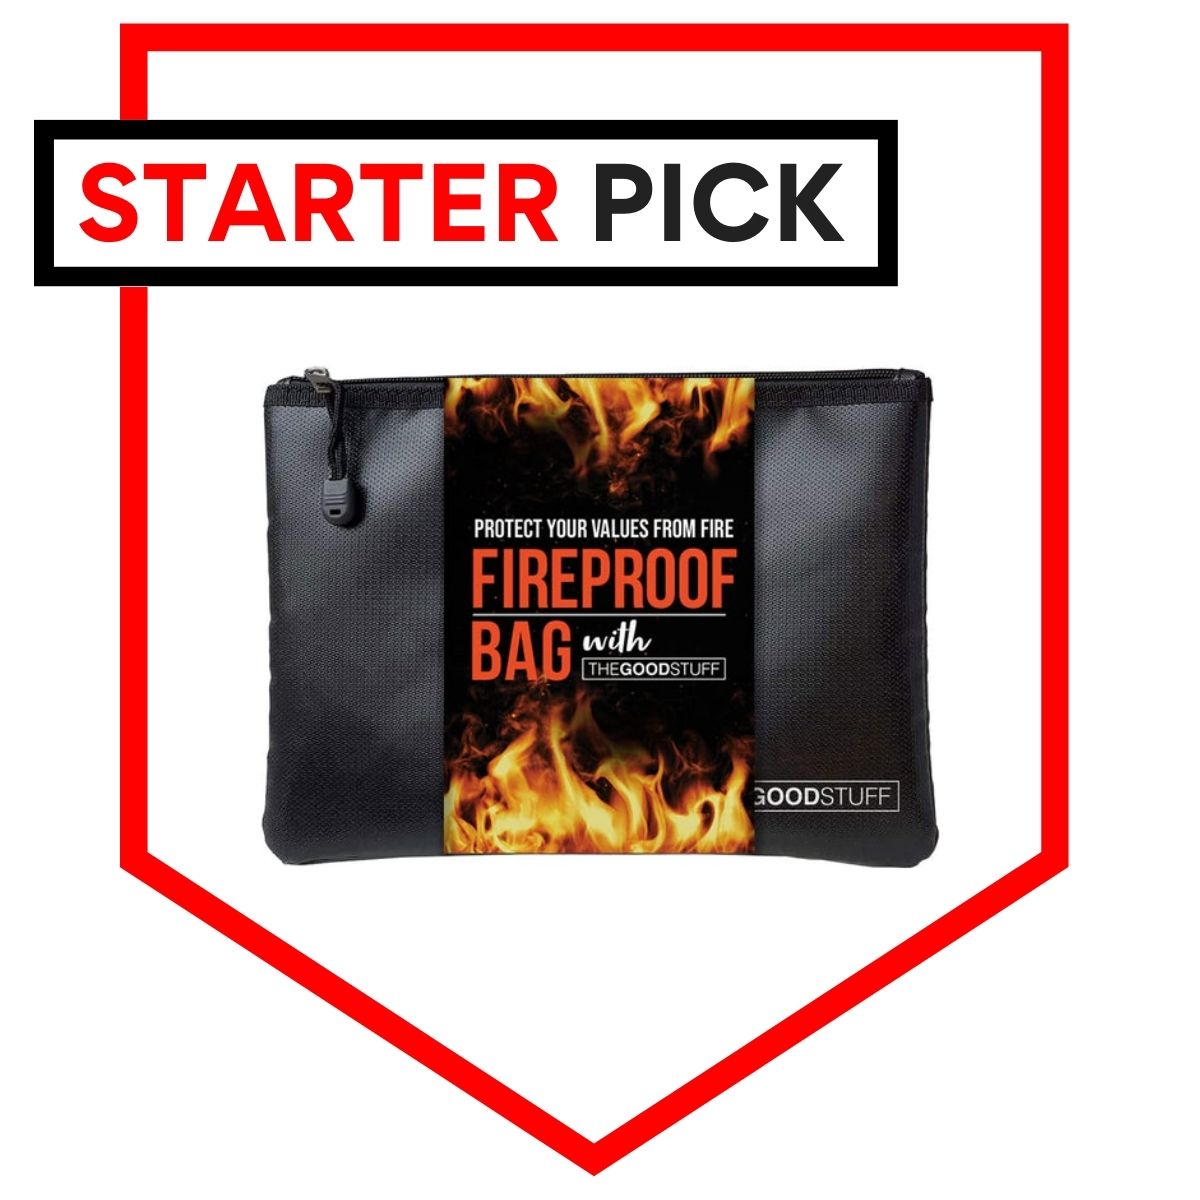 The Good Stuff Fireproof Bag